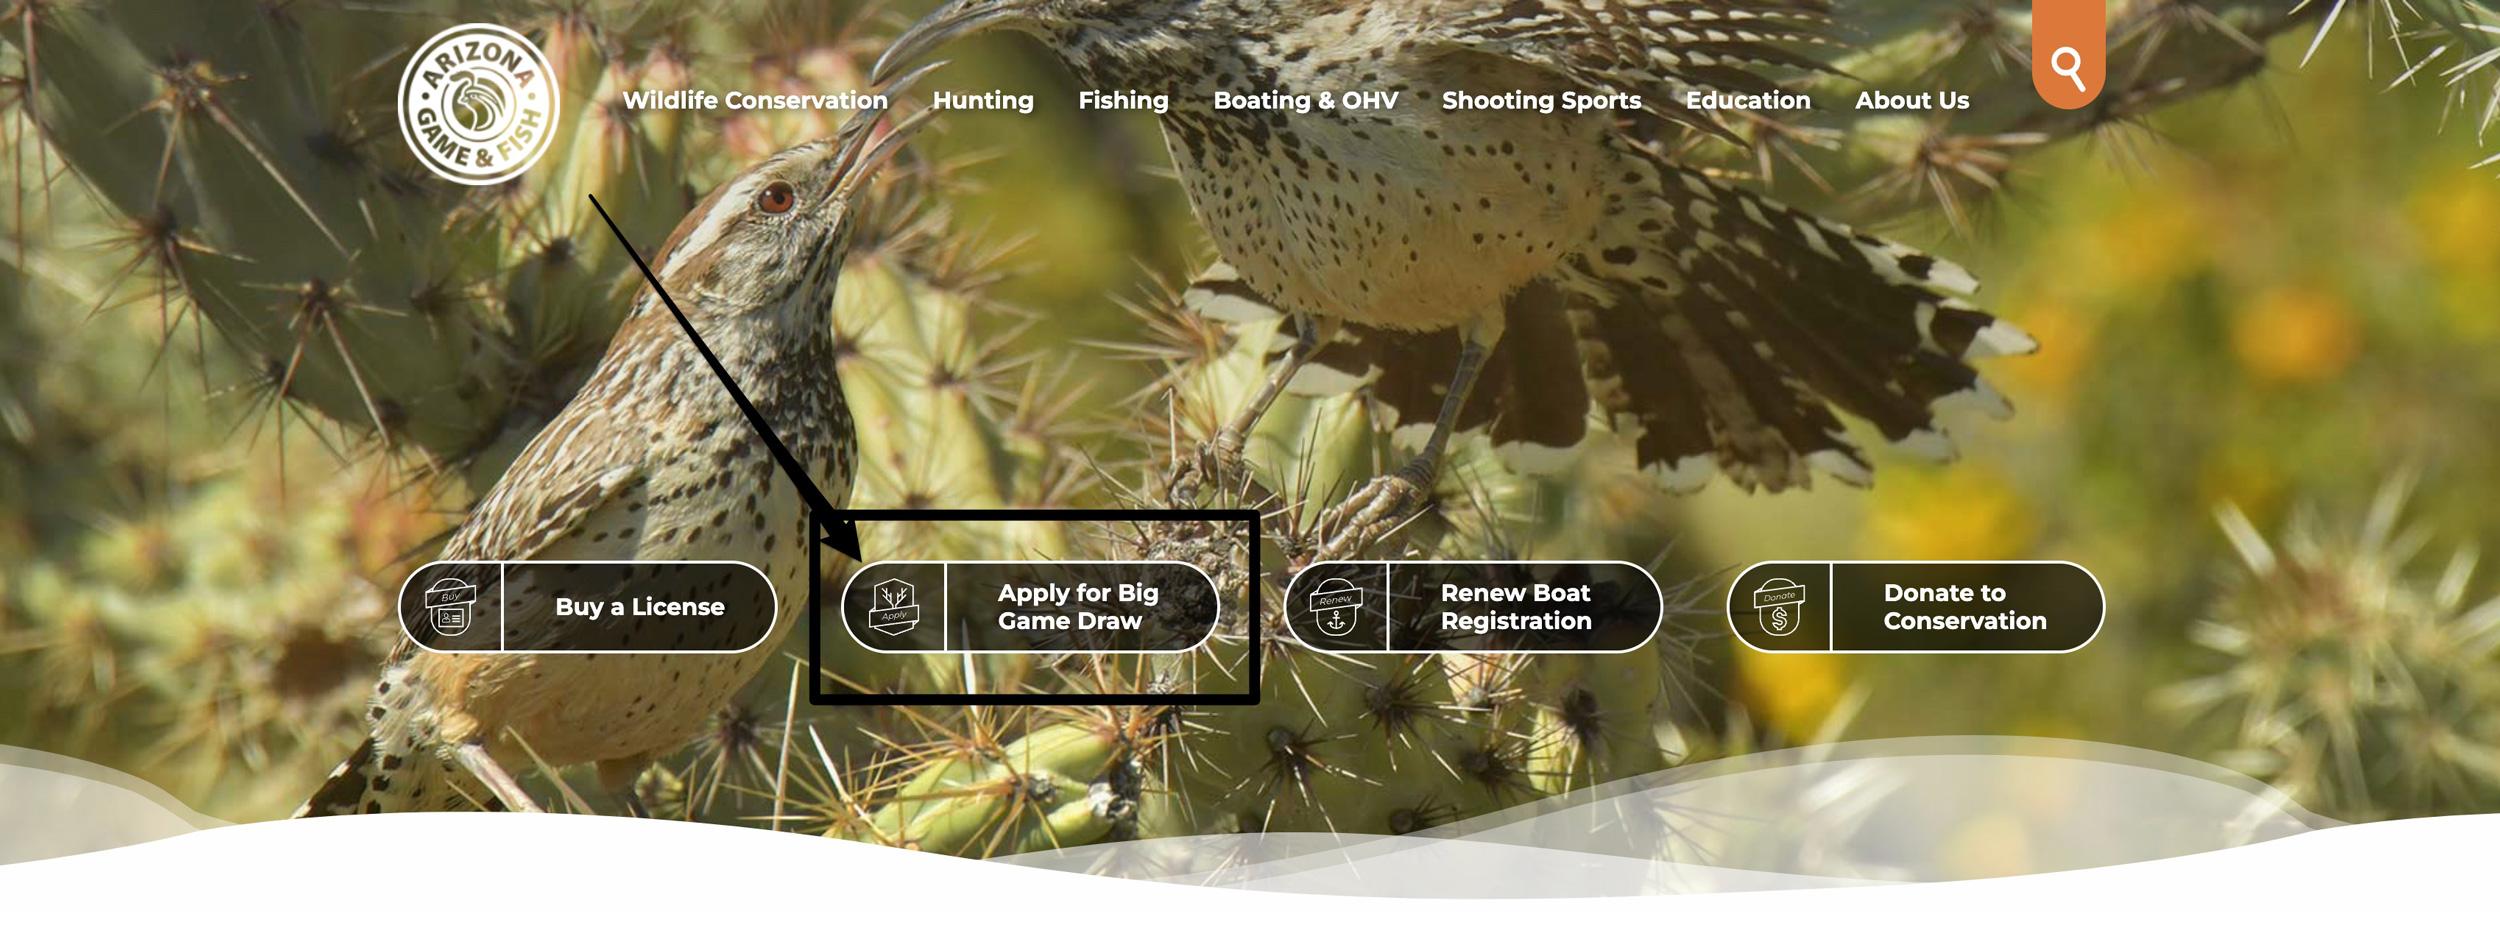 Arizona Game and Fish website homepage